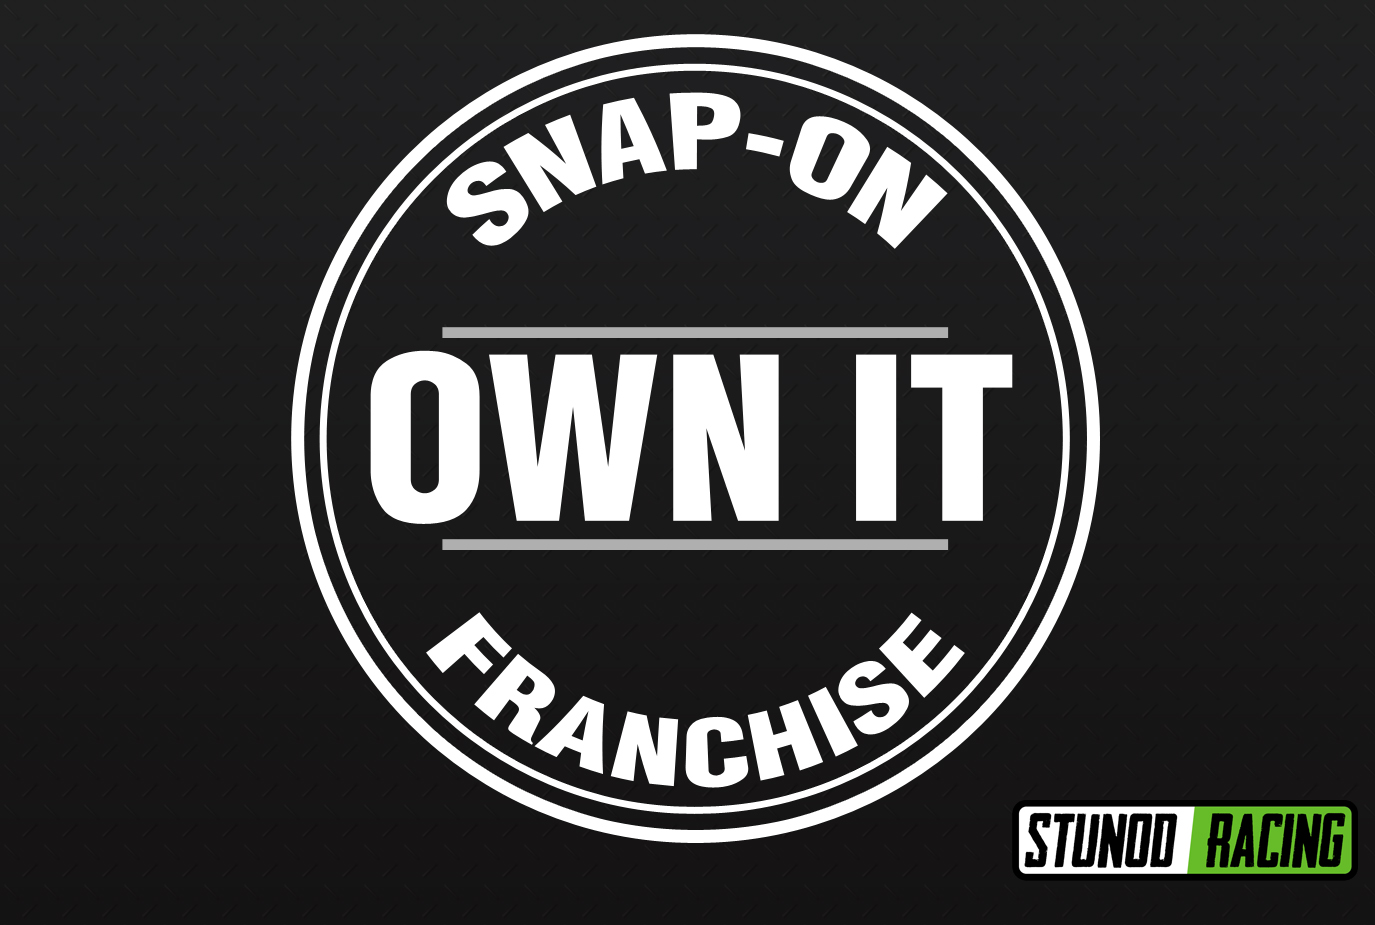 StunodRacing-Snap-On_Own It-Logo.jpg